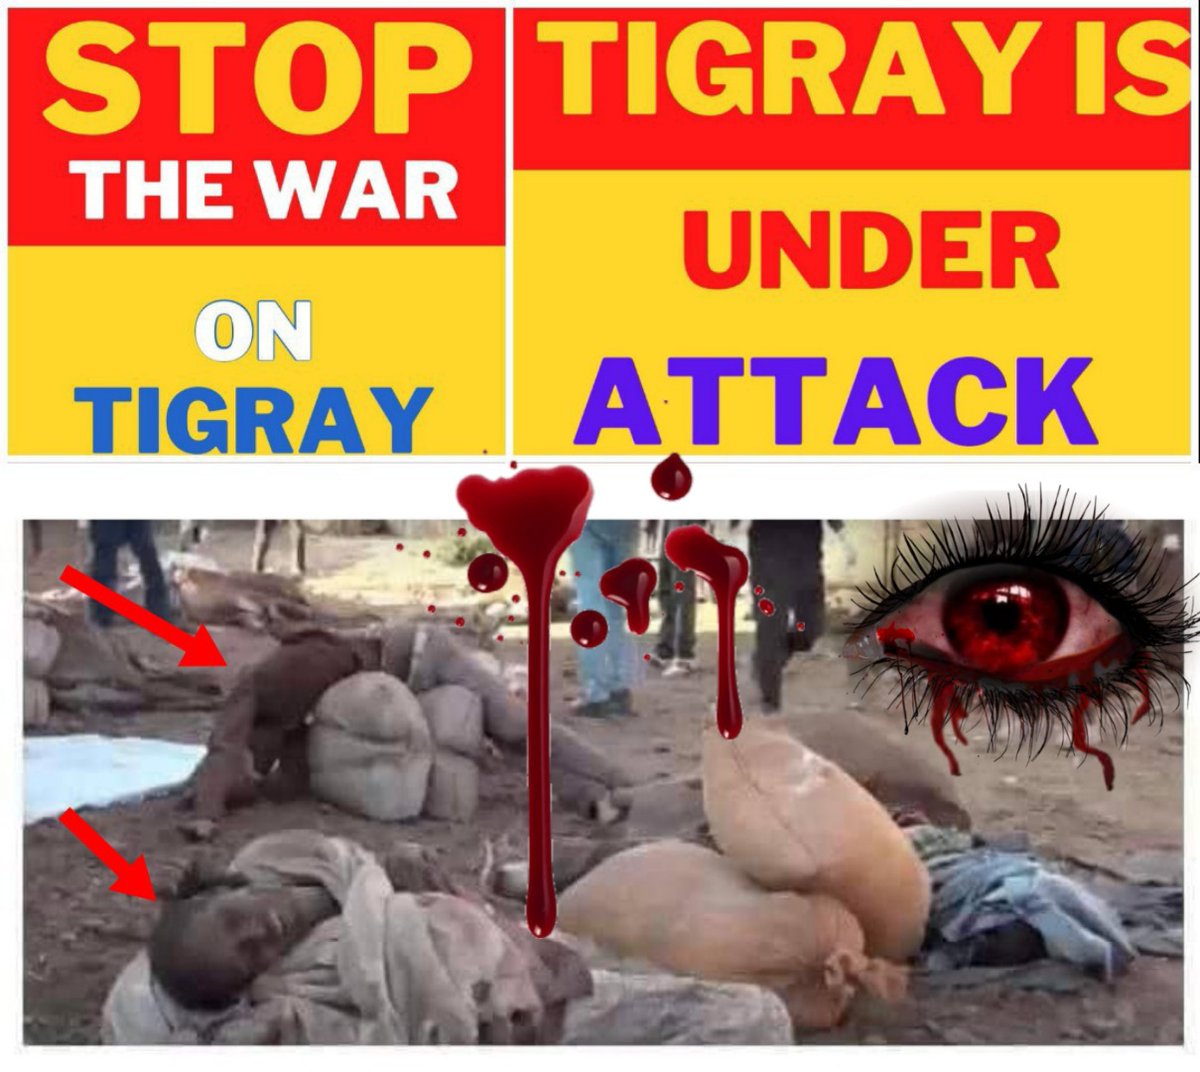 #EndTigraySeige Civilians in Tigray are still suffering! #NoFlyZoneInTigray
@AsstSecStateAF #StopWarOnTigray #StopBombingTigray #TigrayGenocide #TigrayUnderAttack 
@EUCouncil
@UN_HRC
@_AfricanUnion
@StateDept
@UN
@IntlCrimCourt
@ArmeniaUN
@volker_turk @maza_tigray